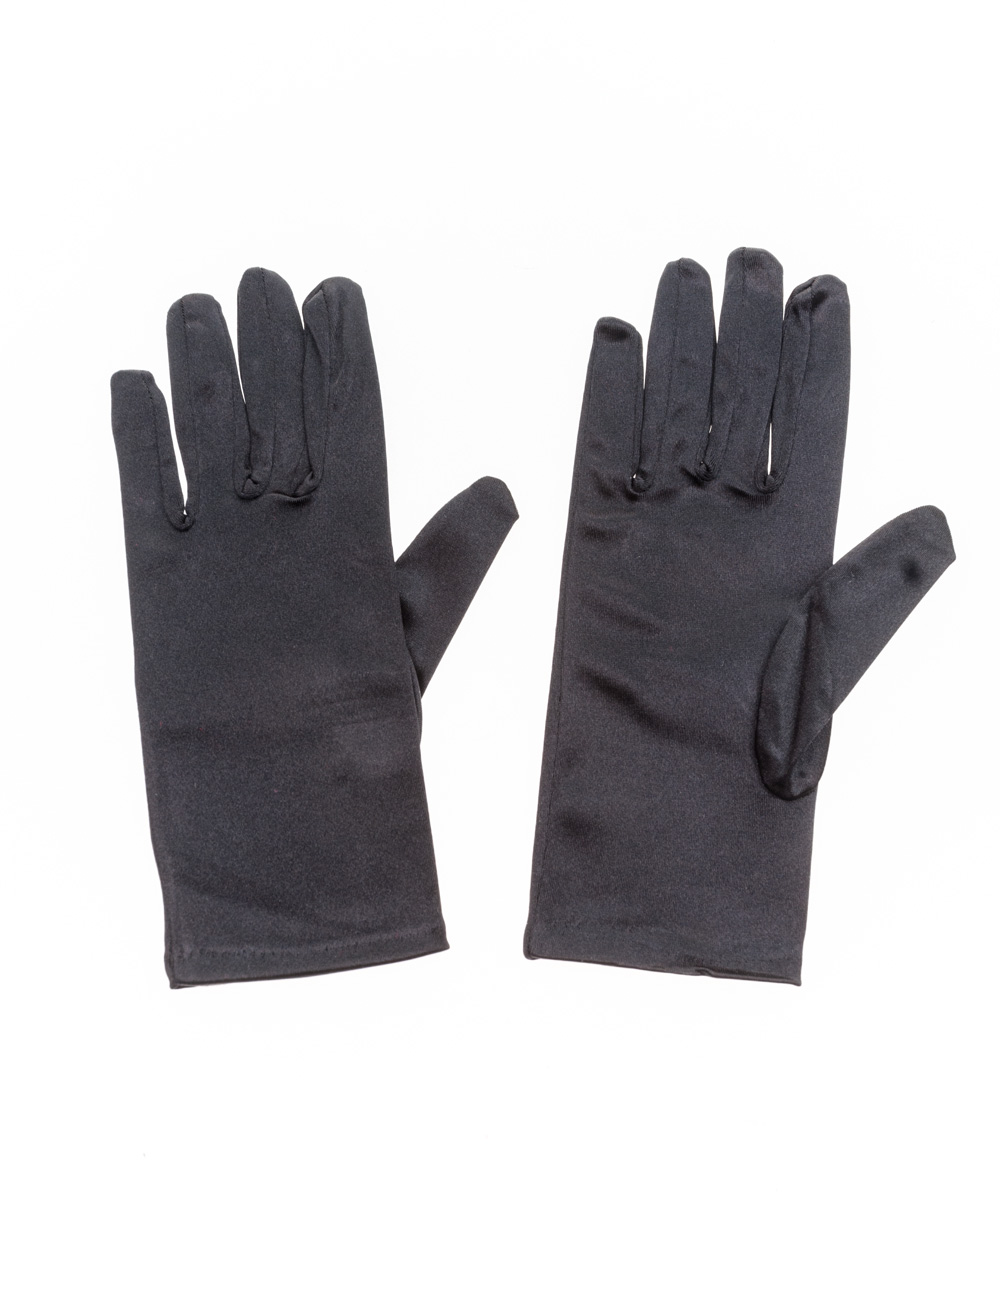 Handschuhe kurz Satin 20cm schwarz one size